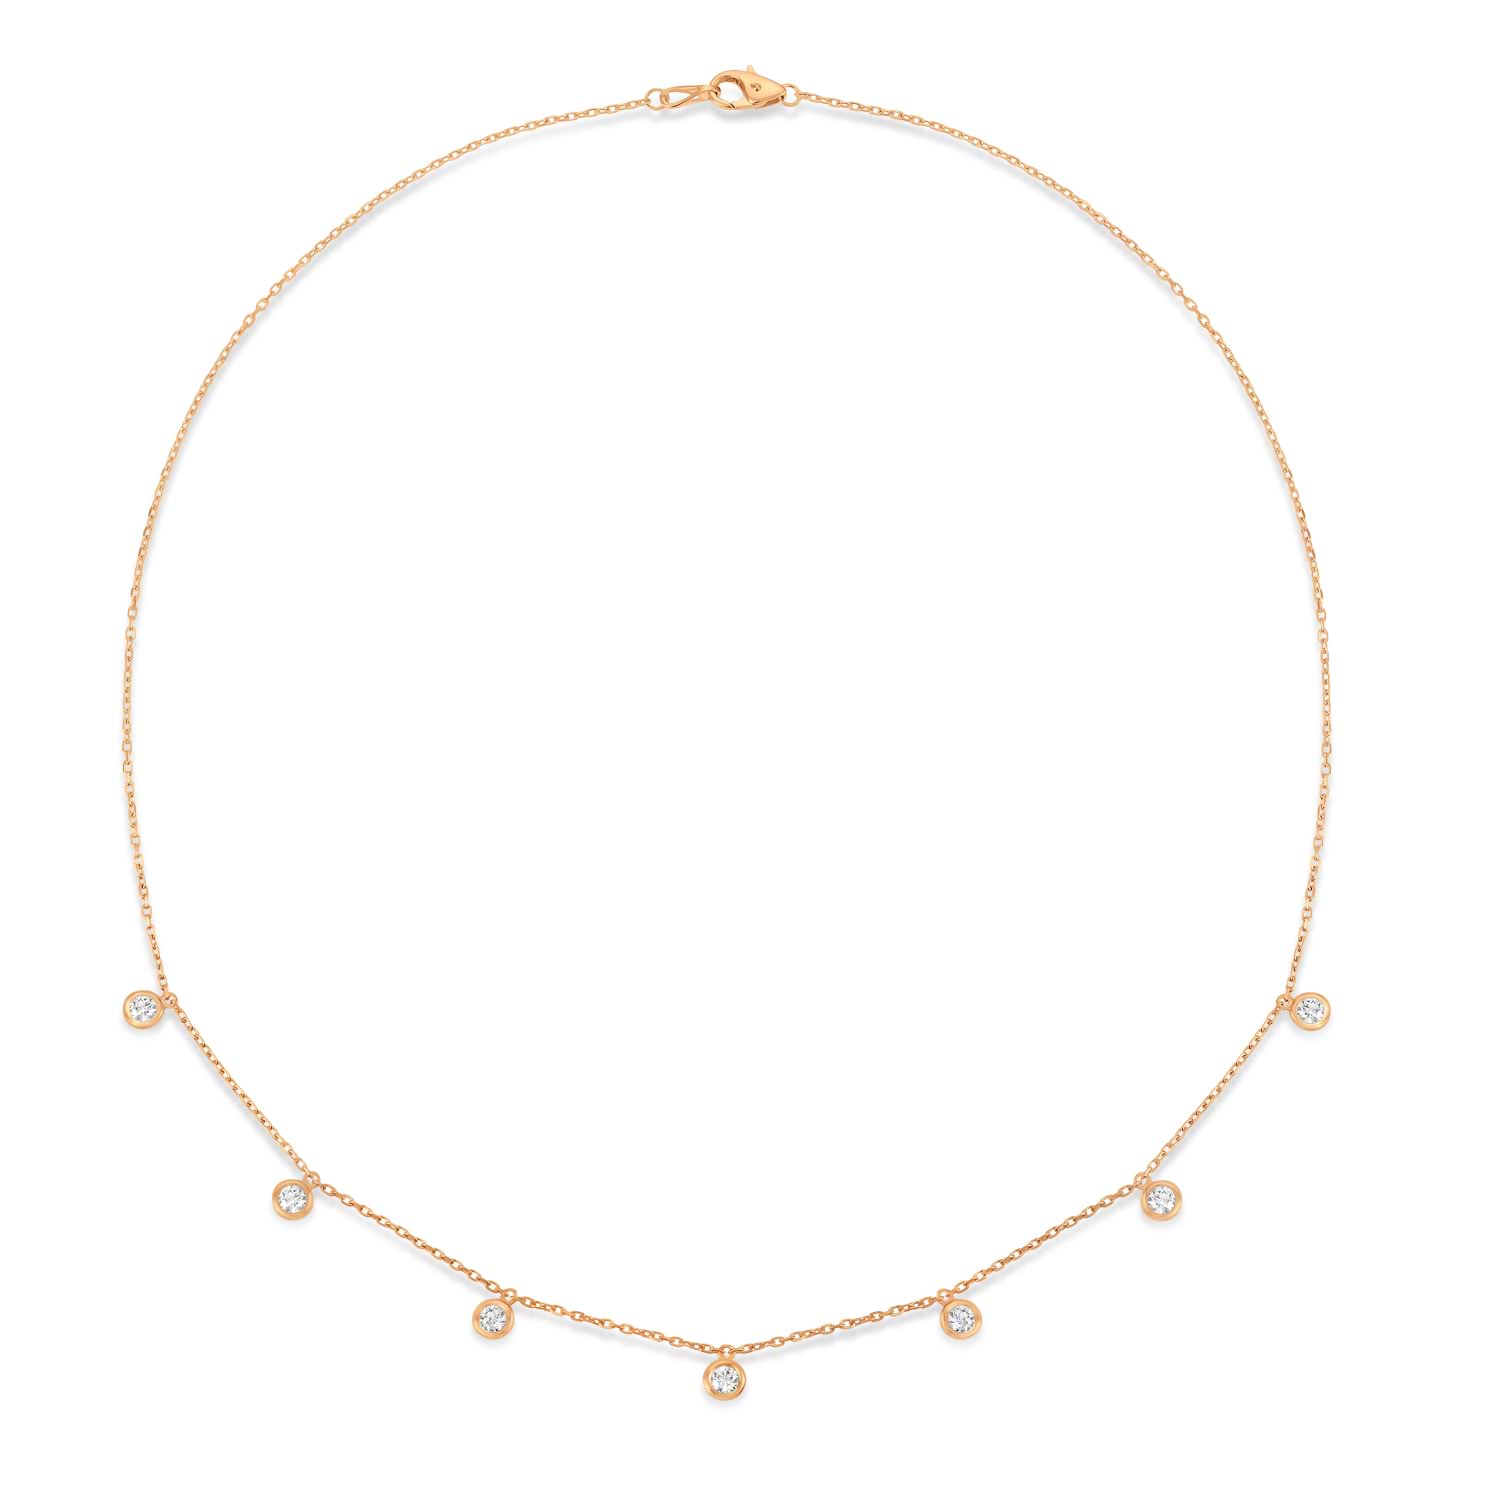 Bezel-Set Diamond Dangle Station Necklace in 14k Rose Gold (1.00 ctw)